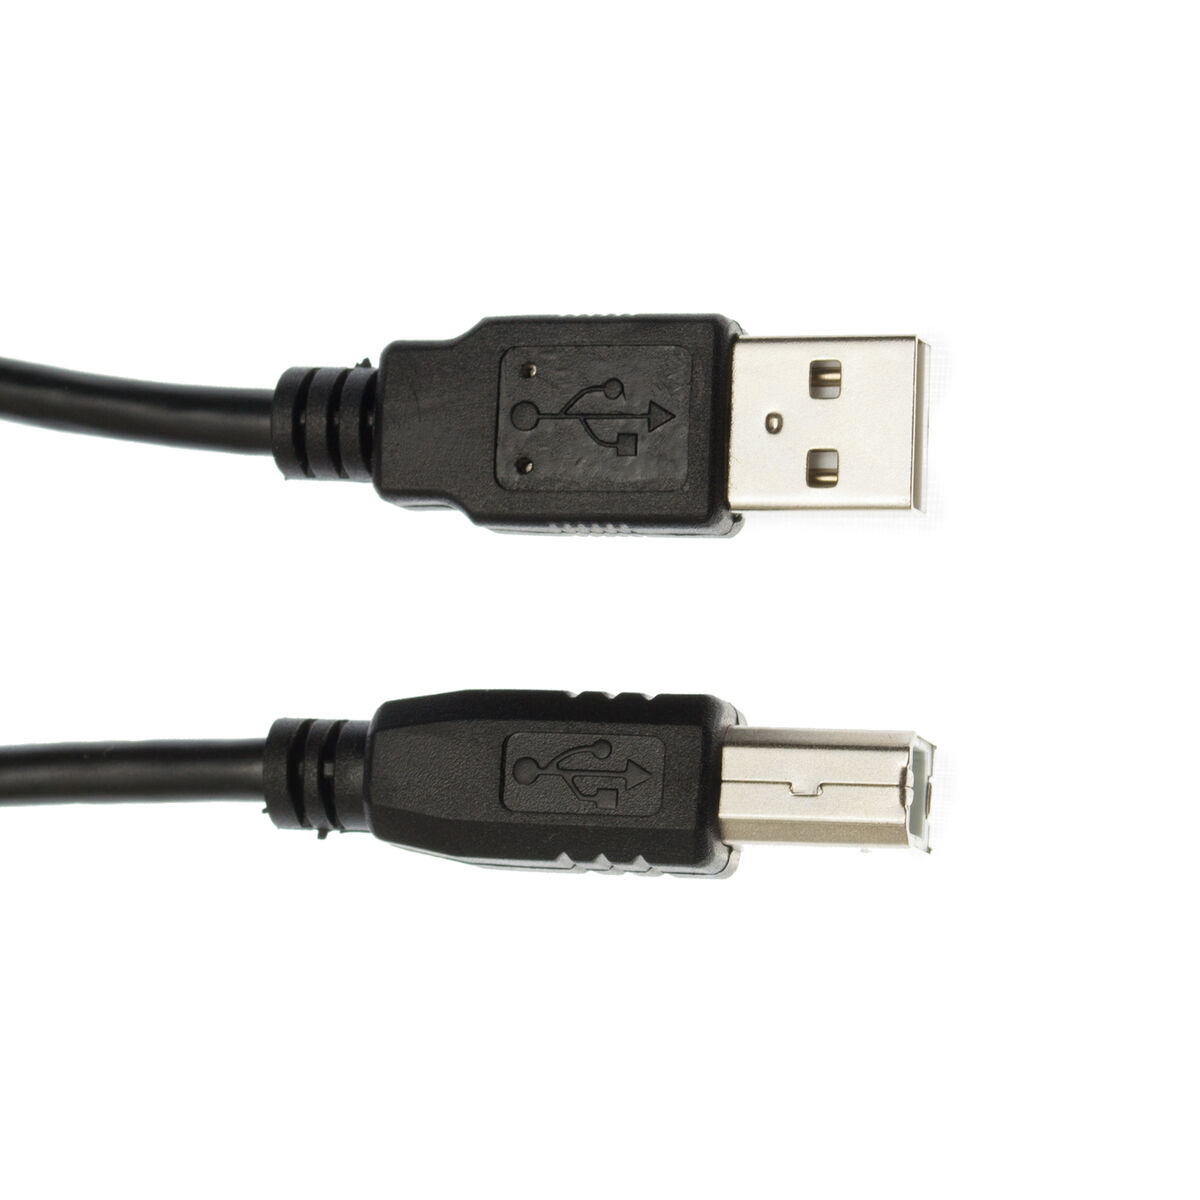 USB PC / Fast Data Cable Compatible with Canon PIXMA MG2500 Printer | eBay